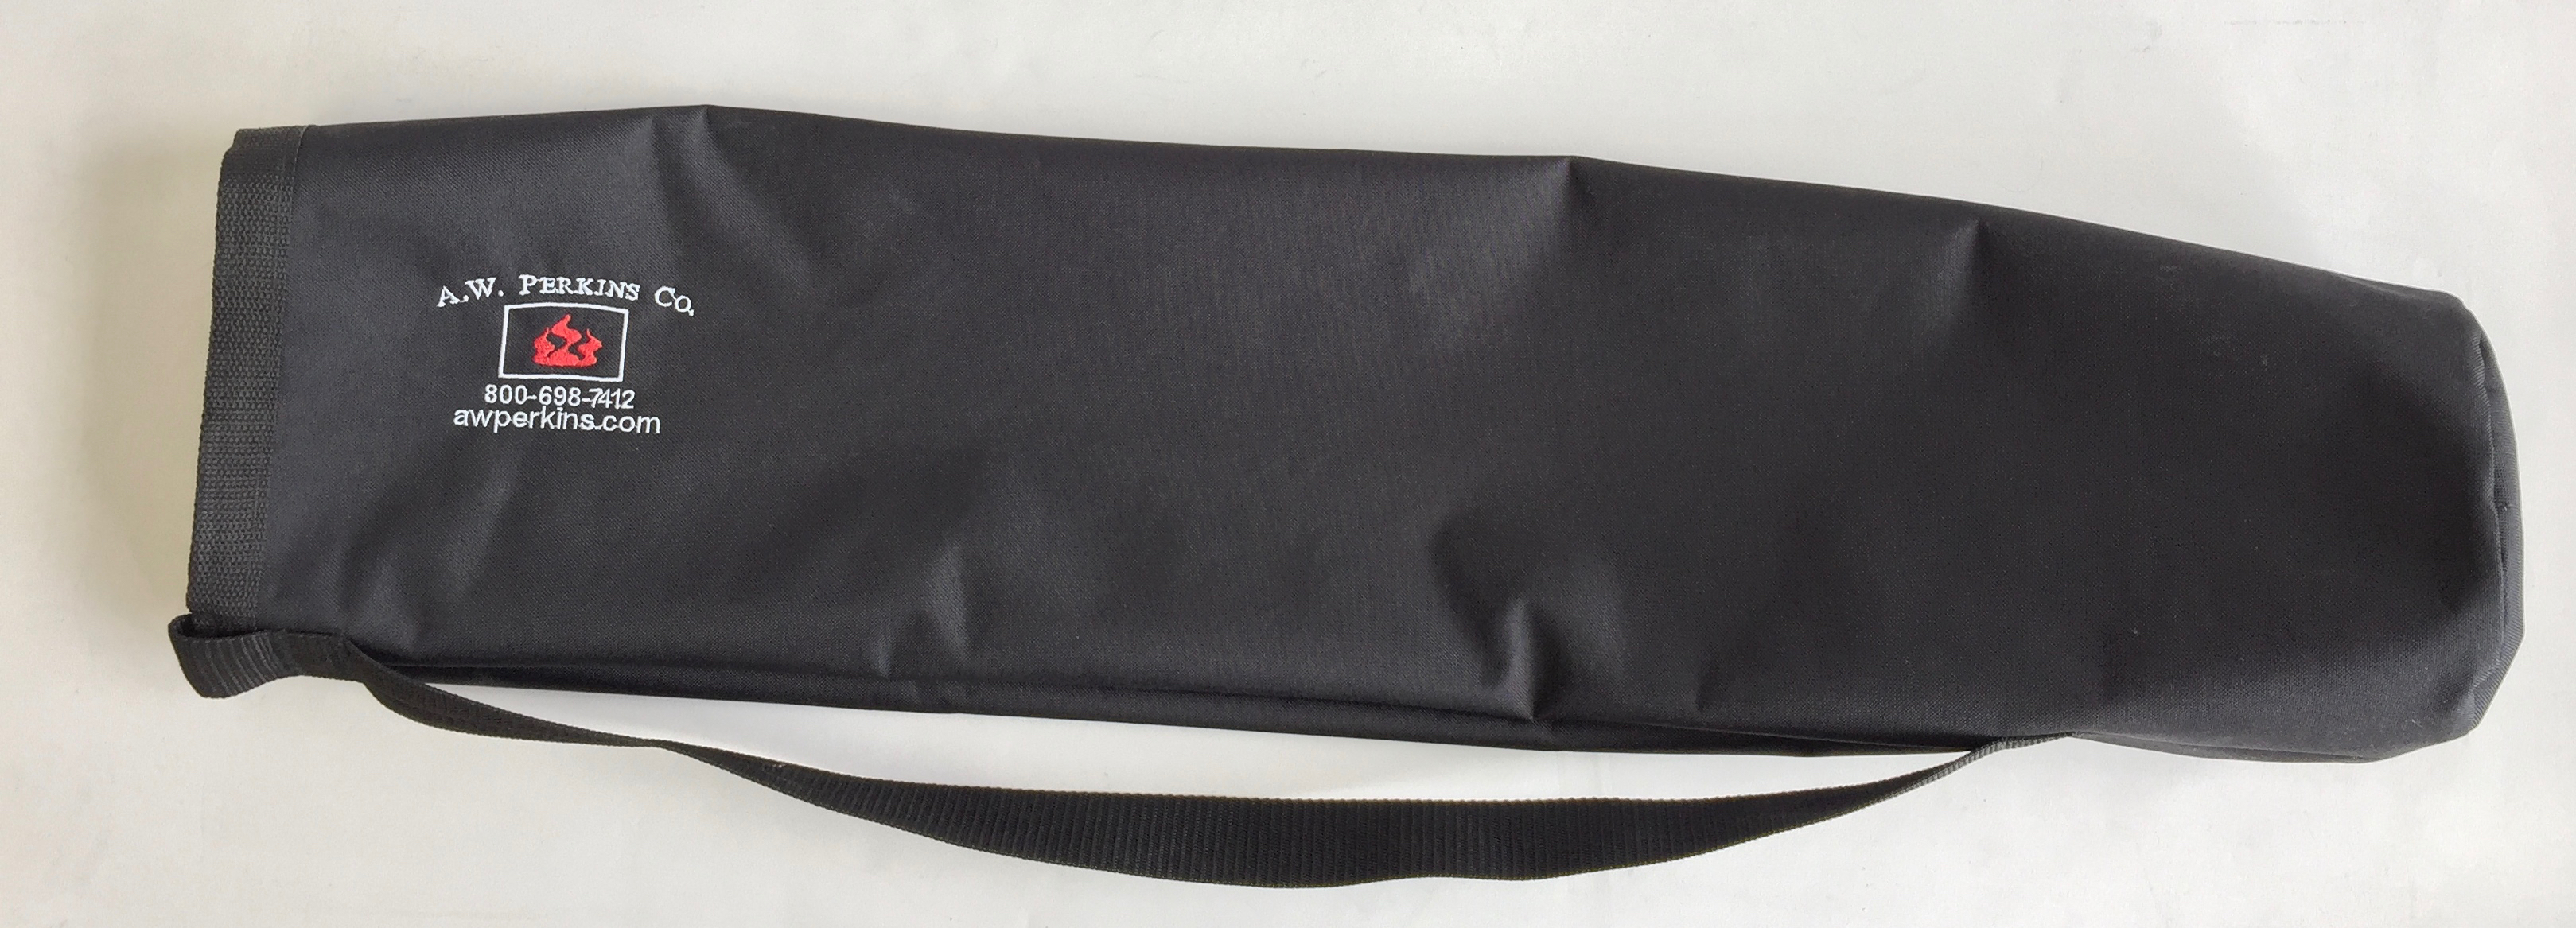 7603 3' Open End ballistics nylon carry bag, shoulder strap, Perkins logo